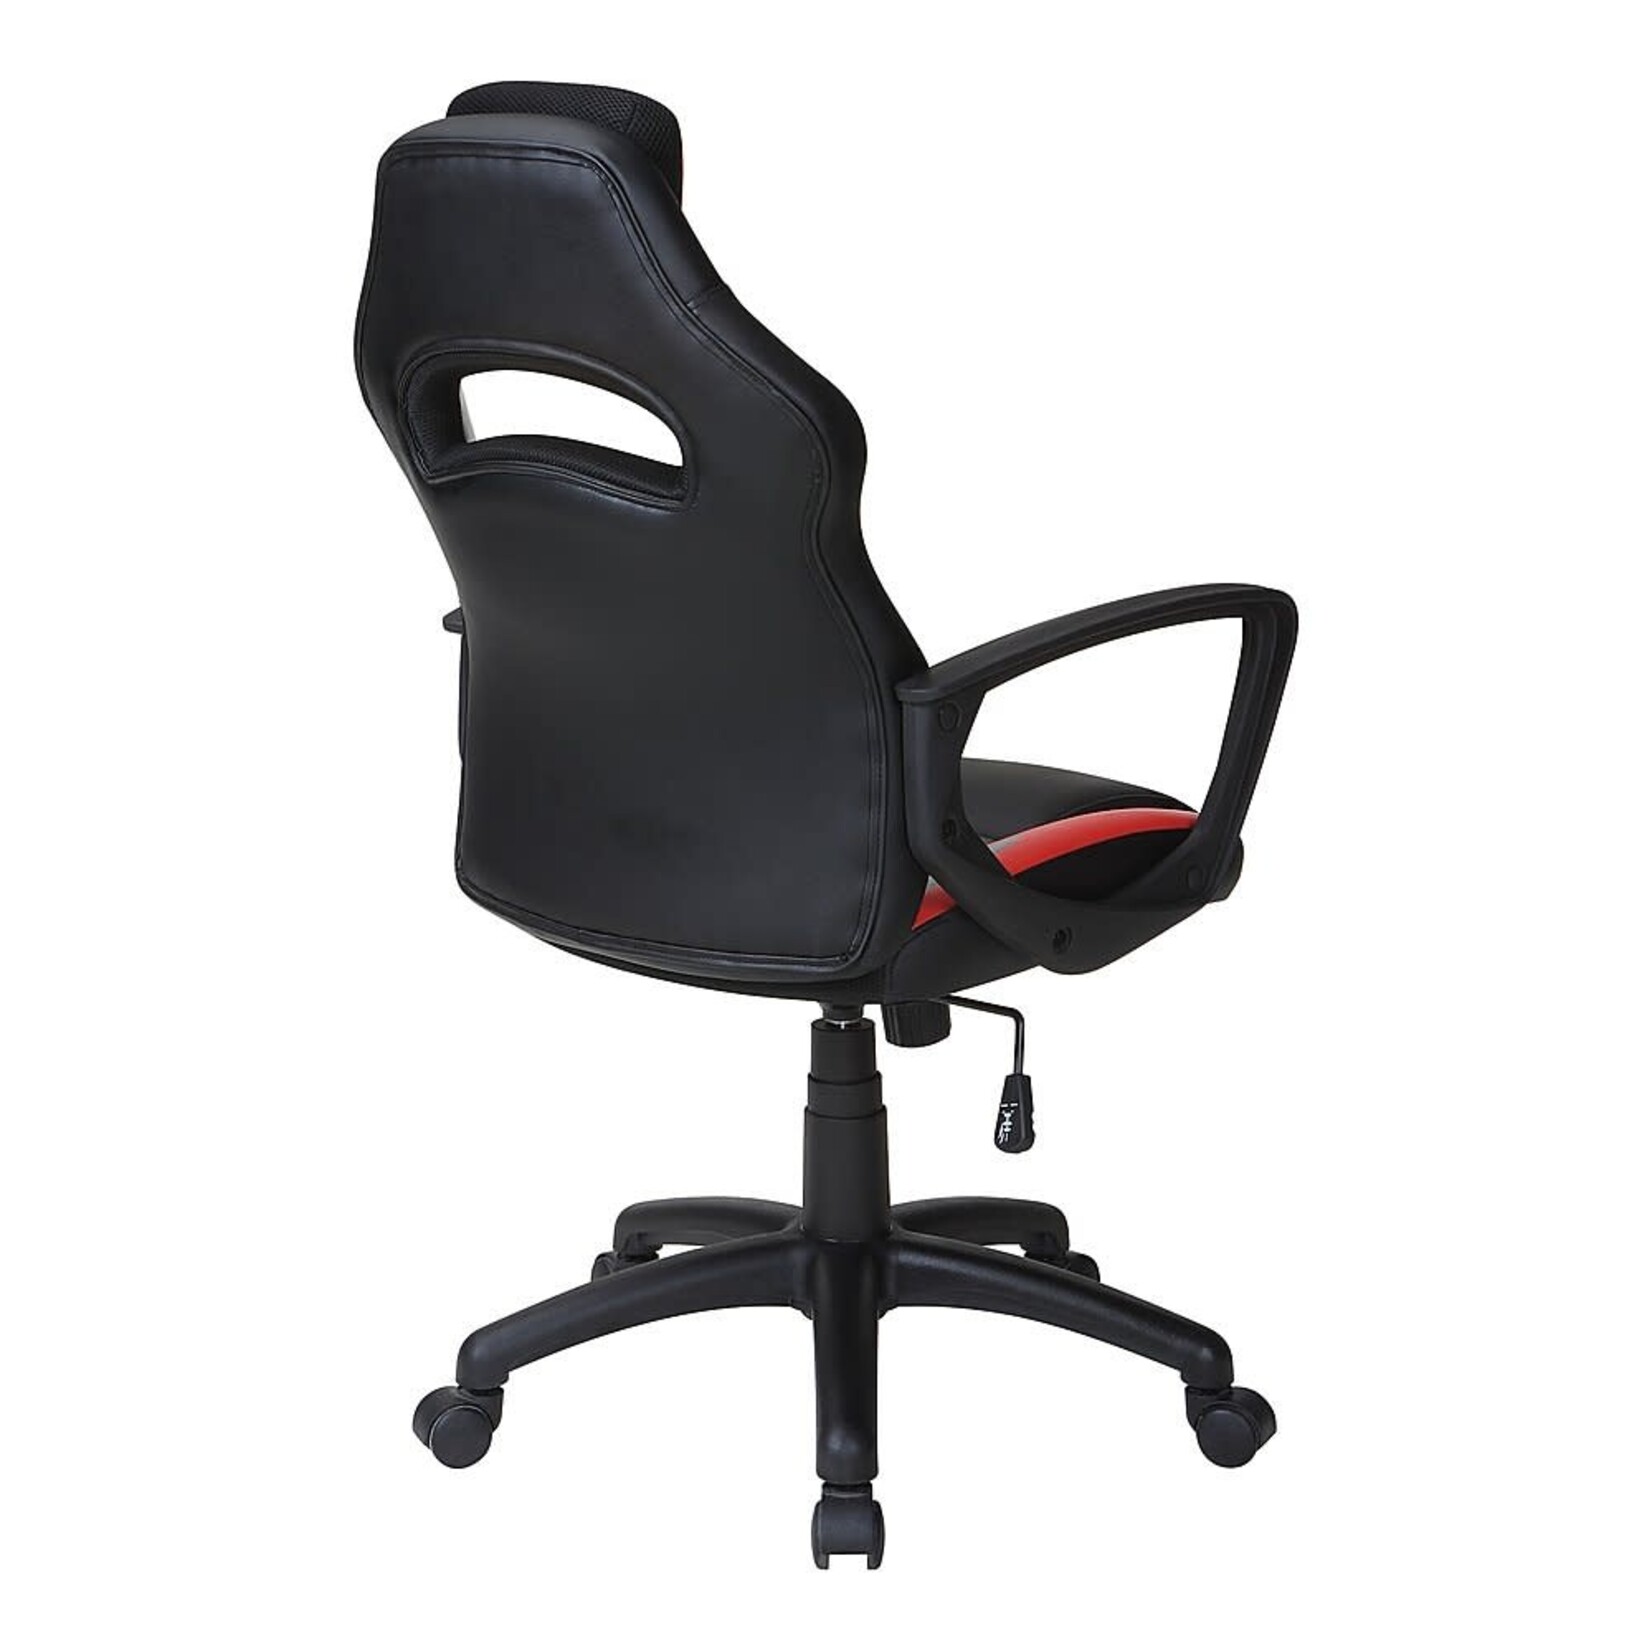 Designlab Kids Gaming Chair- Red